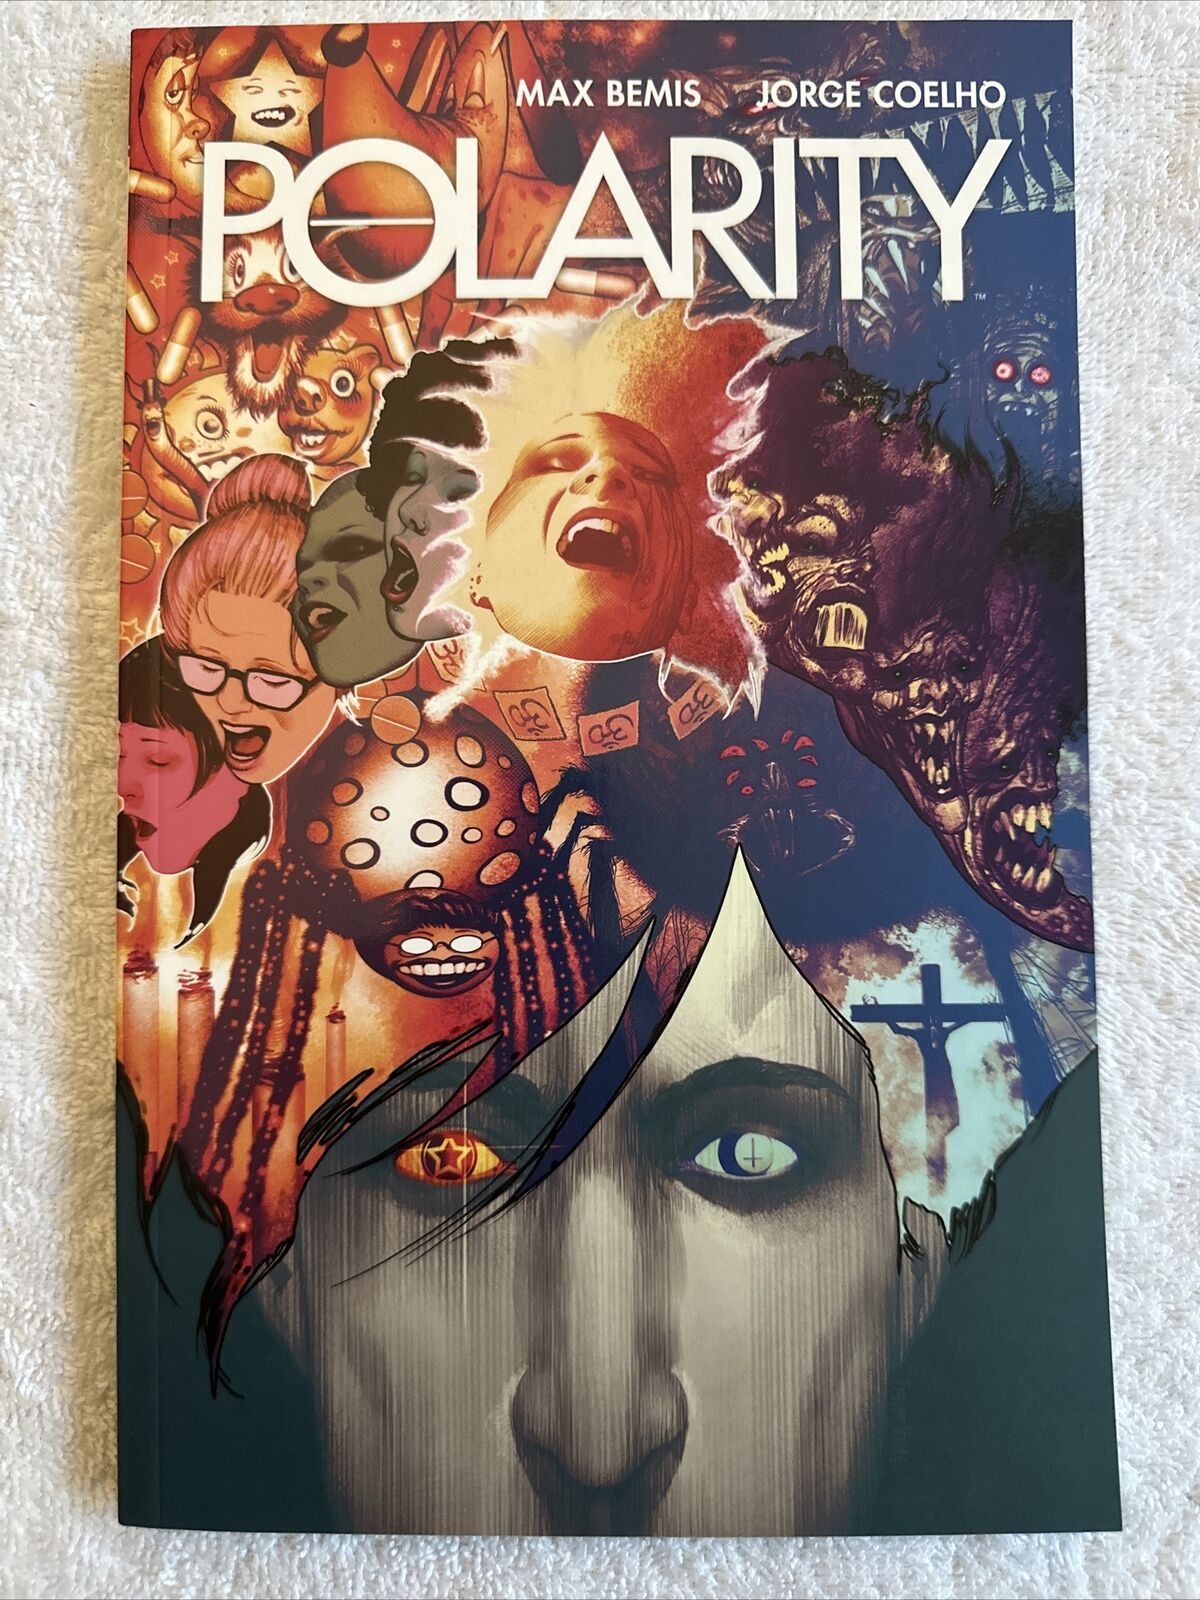 Polarity Volume 1 Boom Studios Max Bemis Jorge Coelho Paperback Graphic Novel A